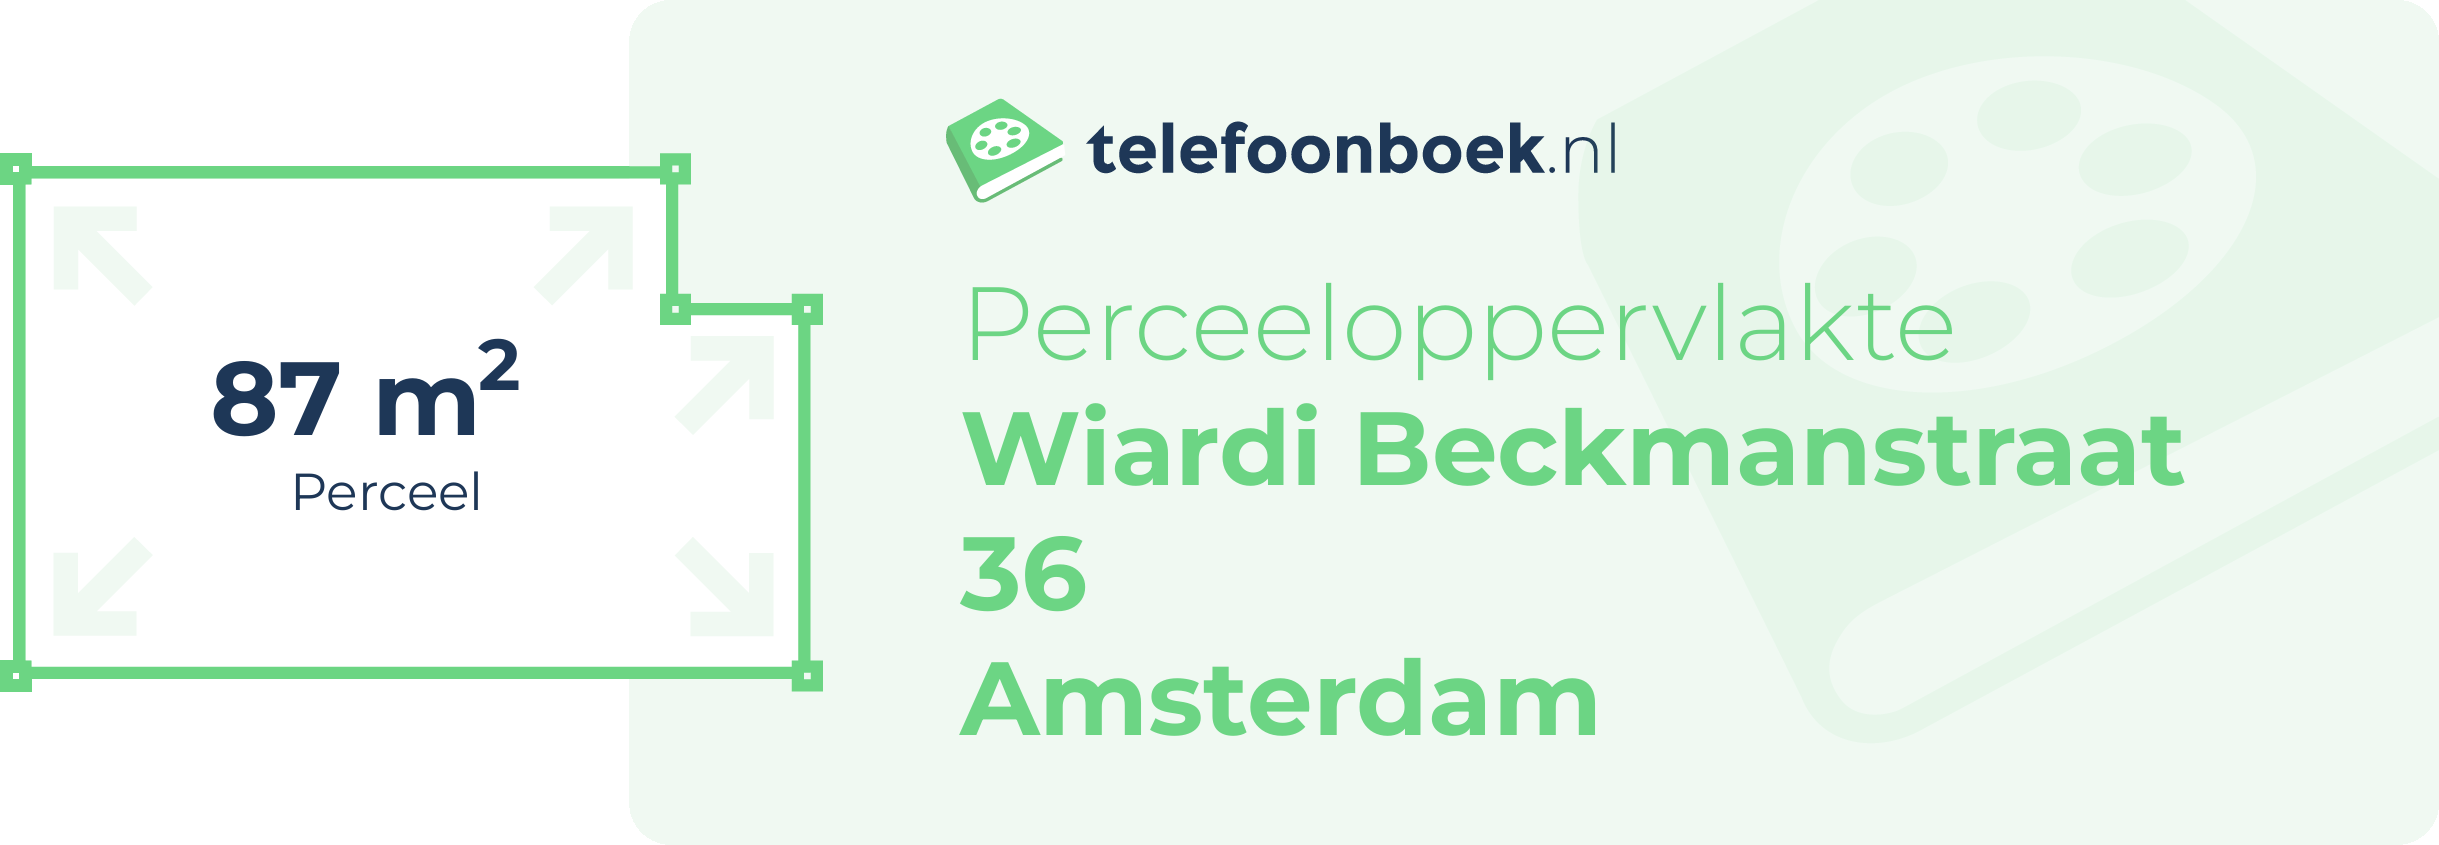 Perceeloppervlakte Wiardi Beckmanstraat 36 Amsterdam